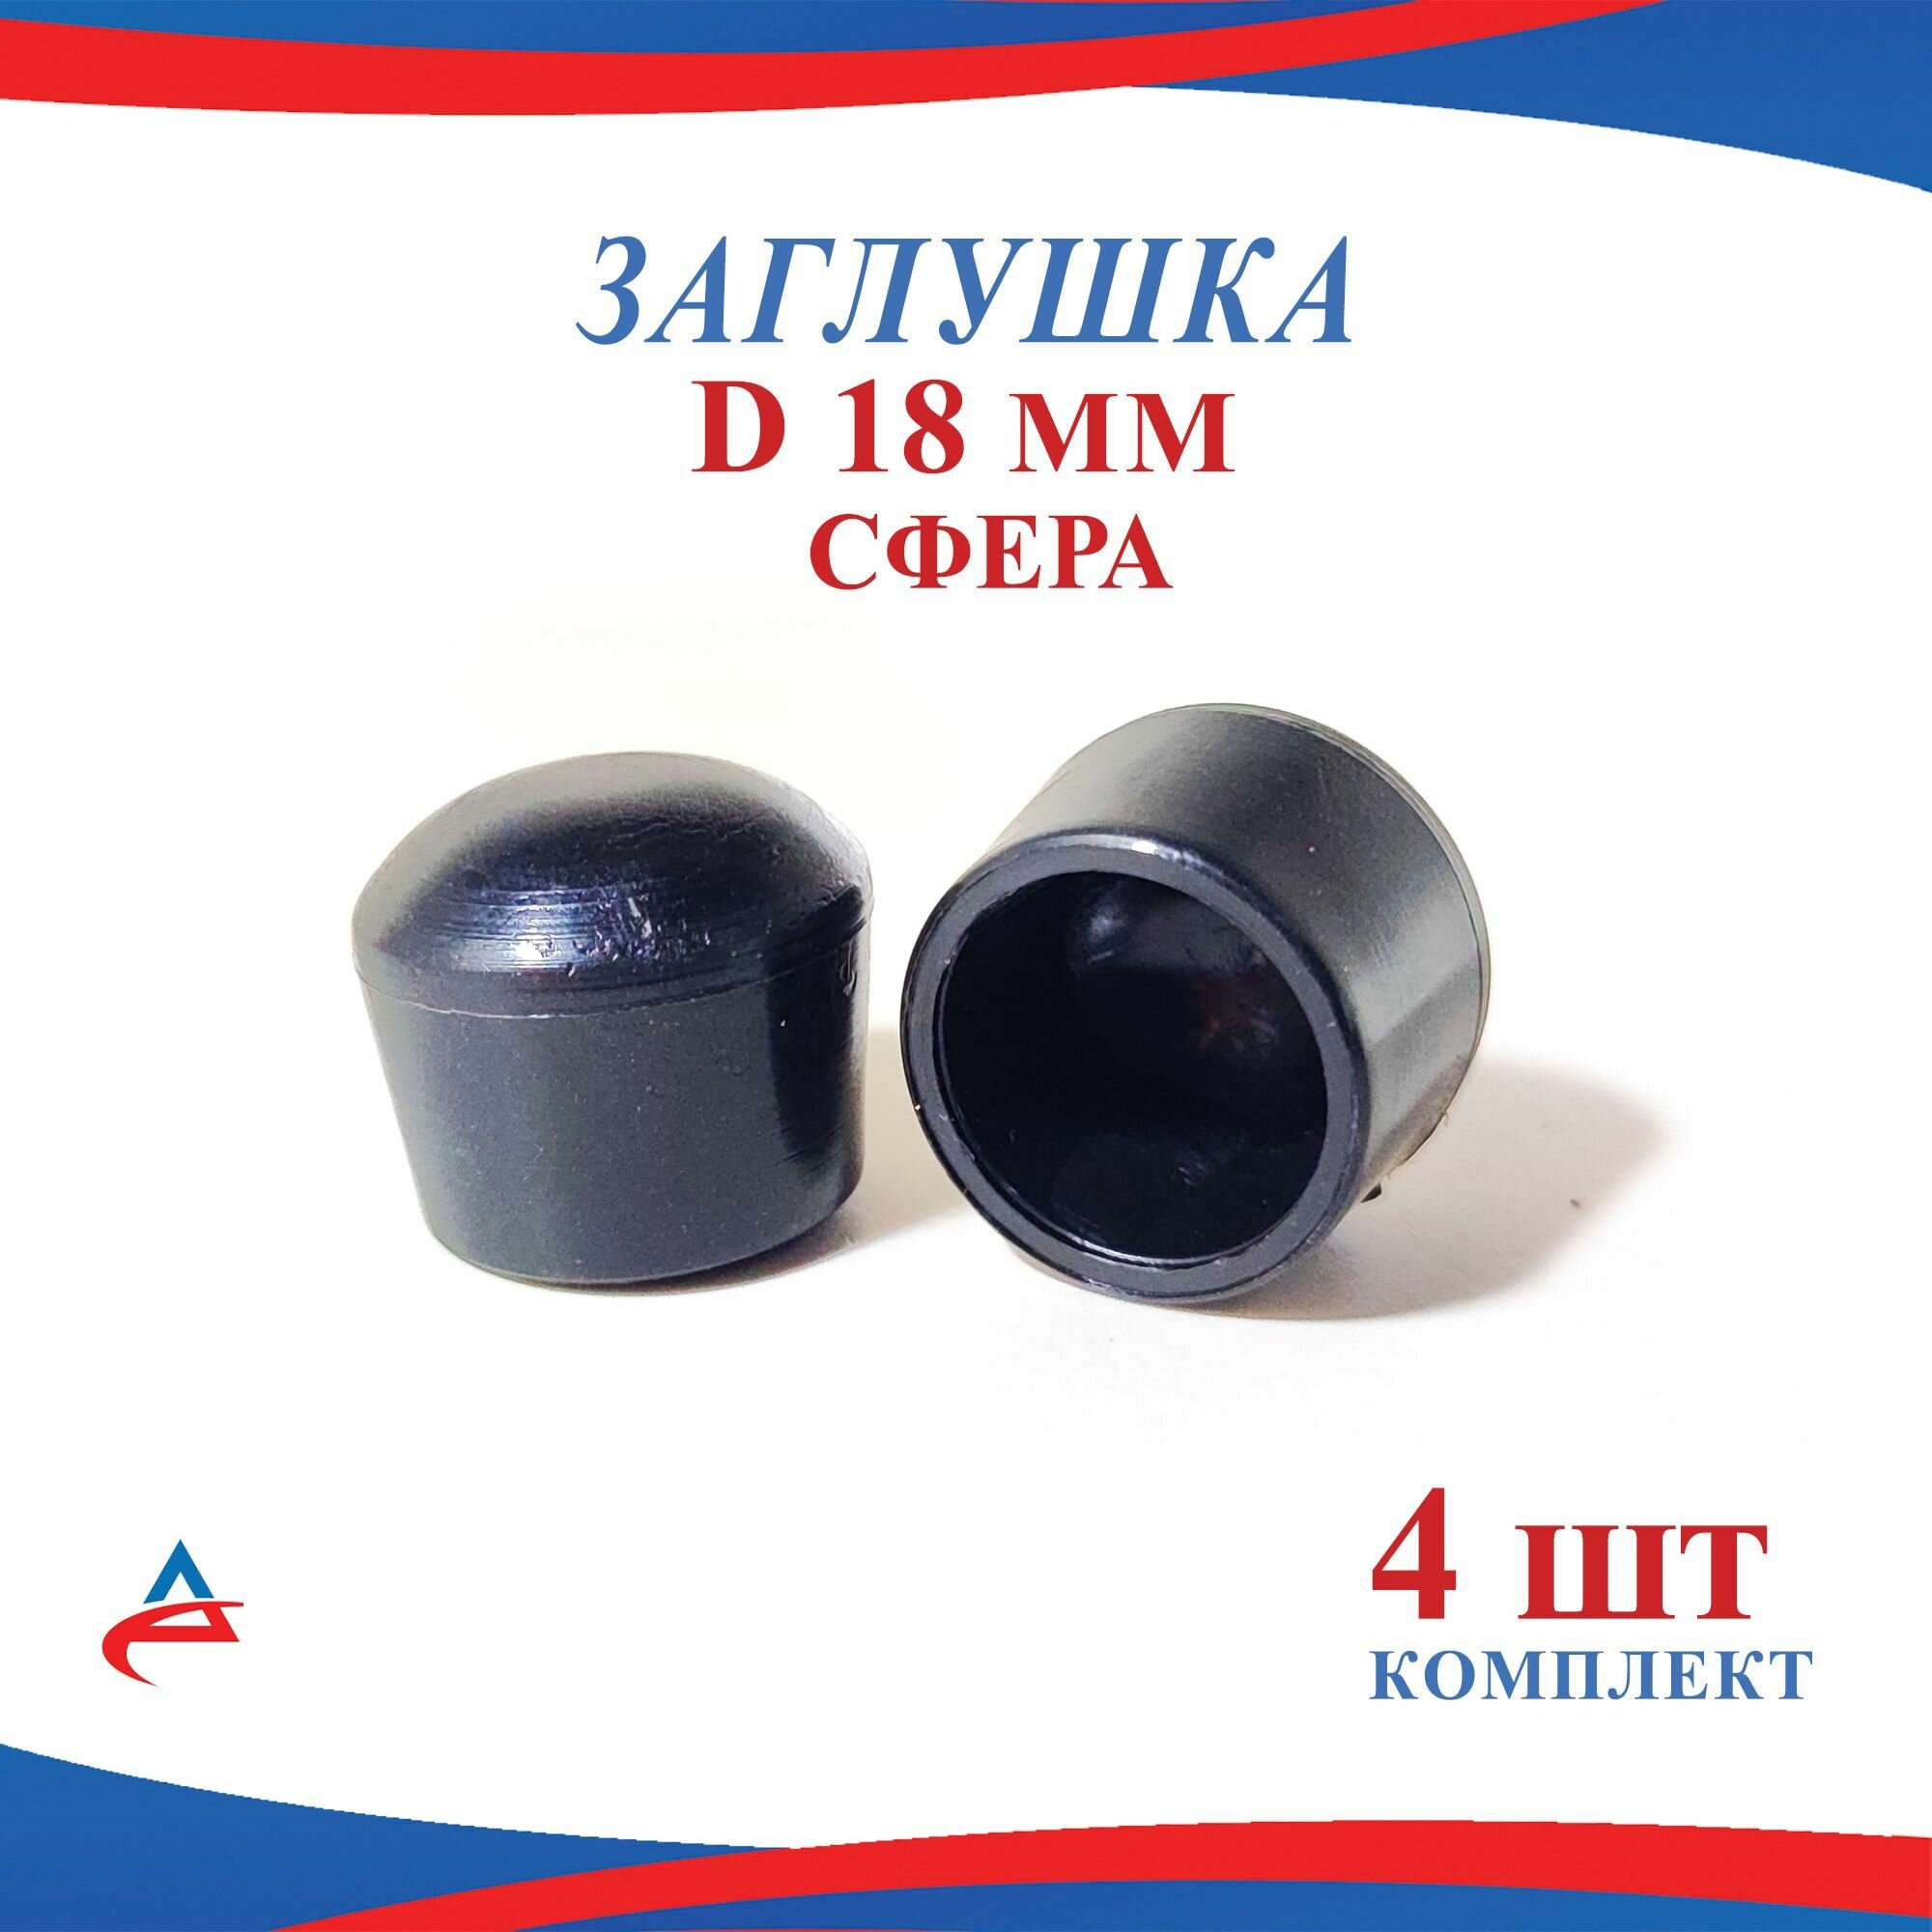 Заглушка Д 18 мм сфера пластиковая для труб диаметр D 18 мм (4шт)